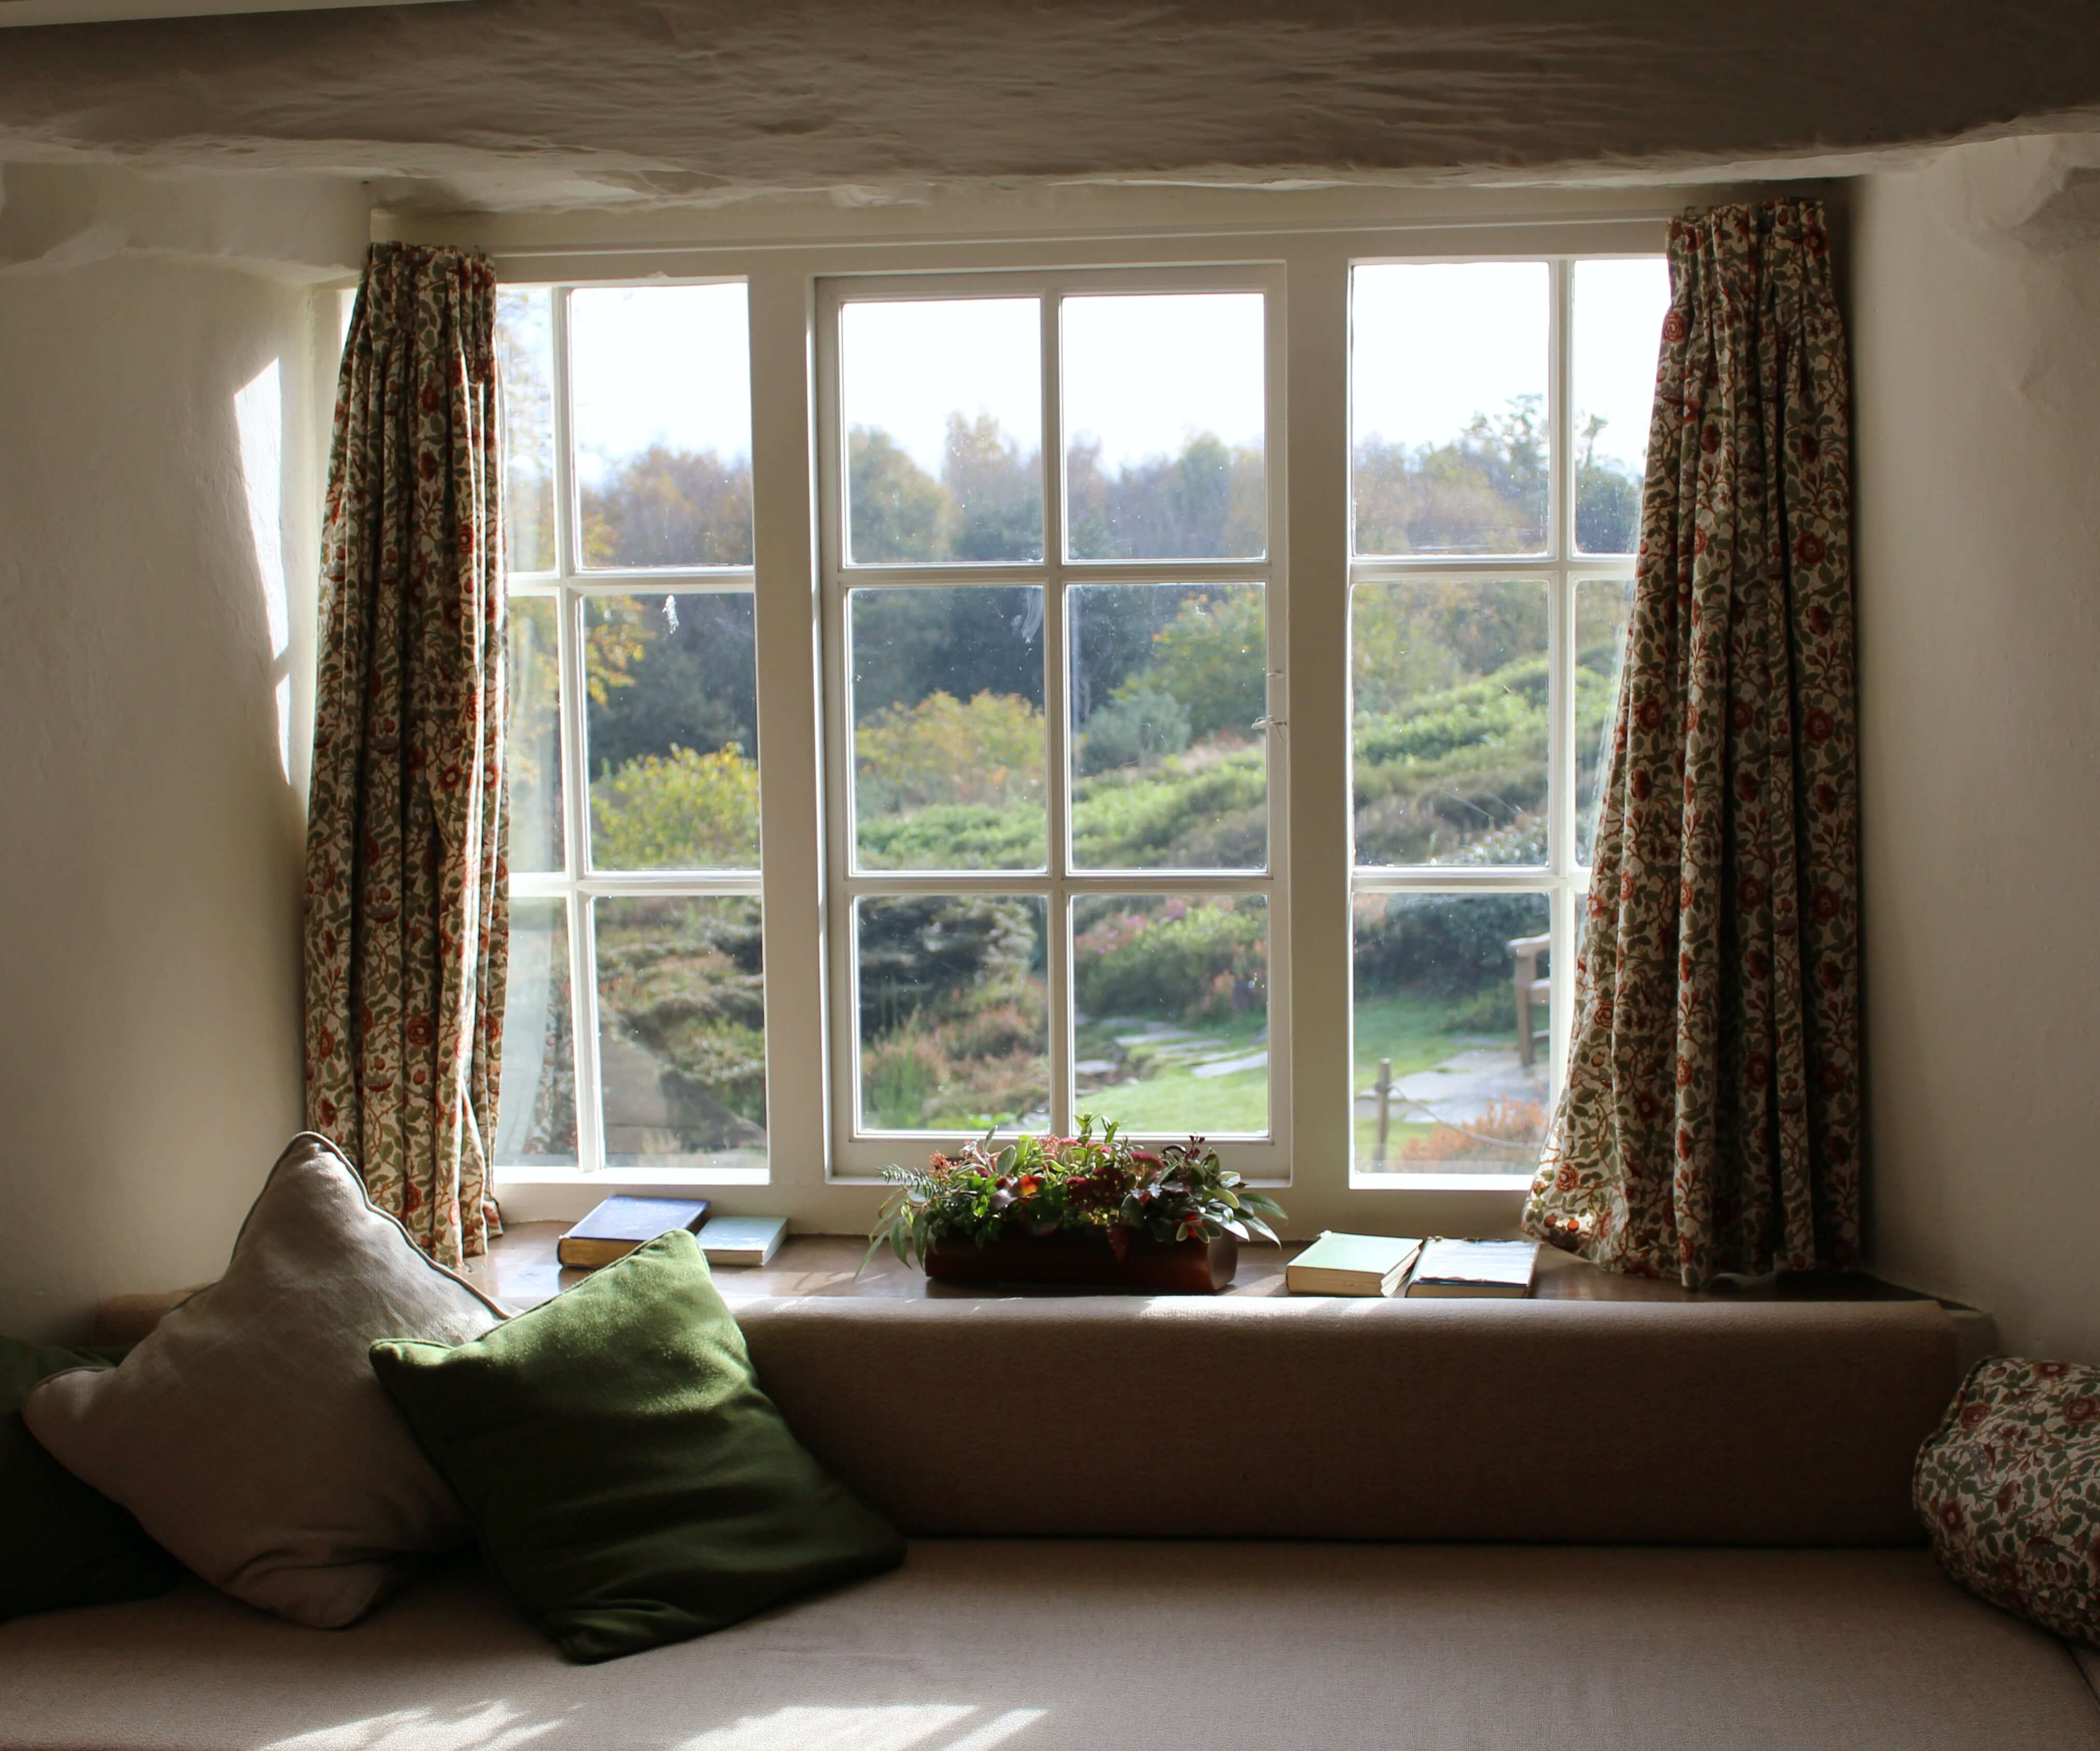 Picture window overlooking rolling hills